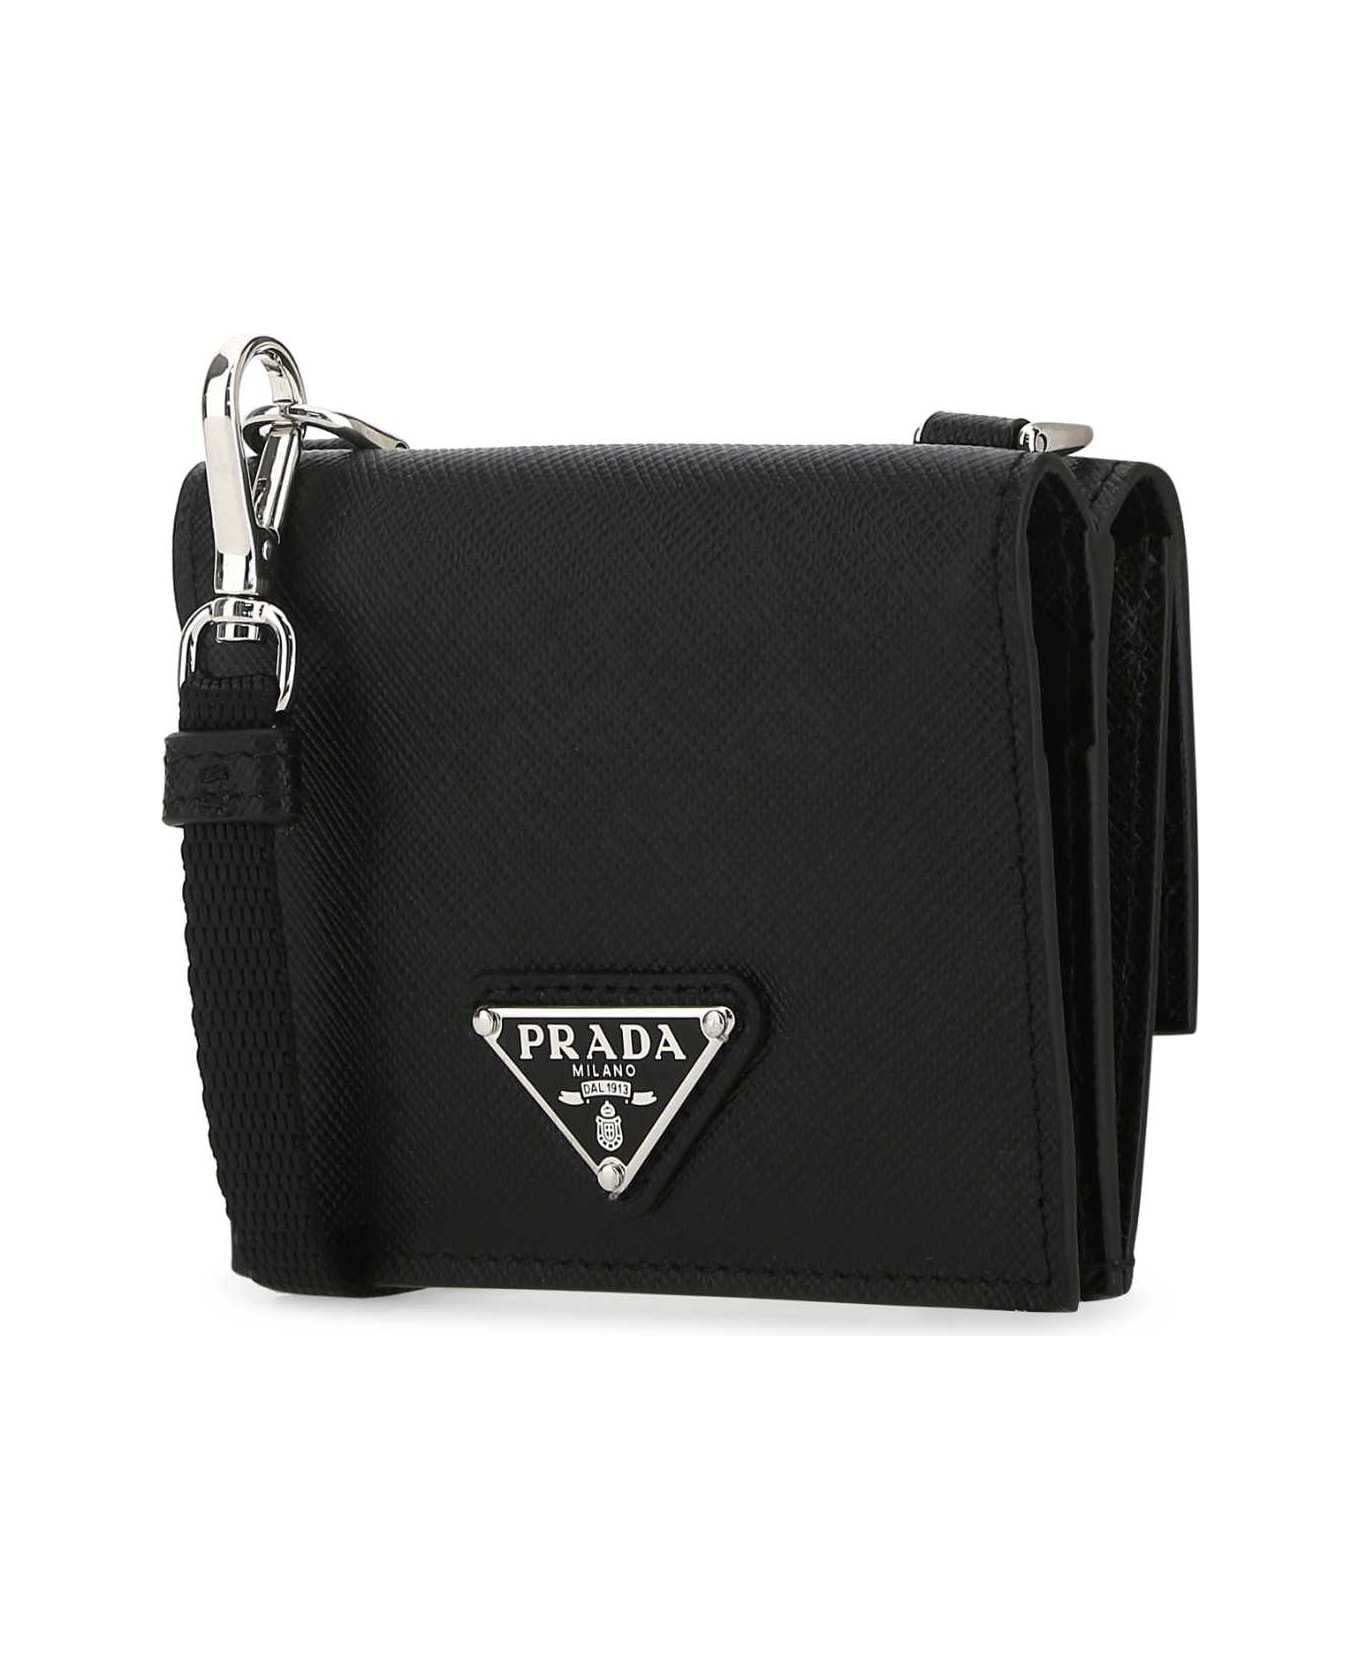 Prada Black Leather Cardholder - F0002 財布